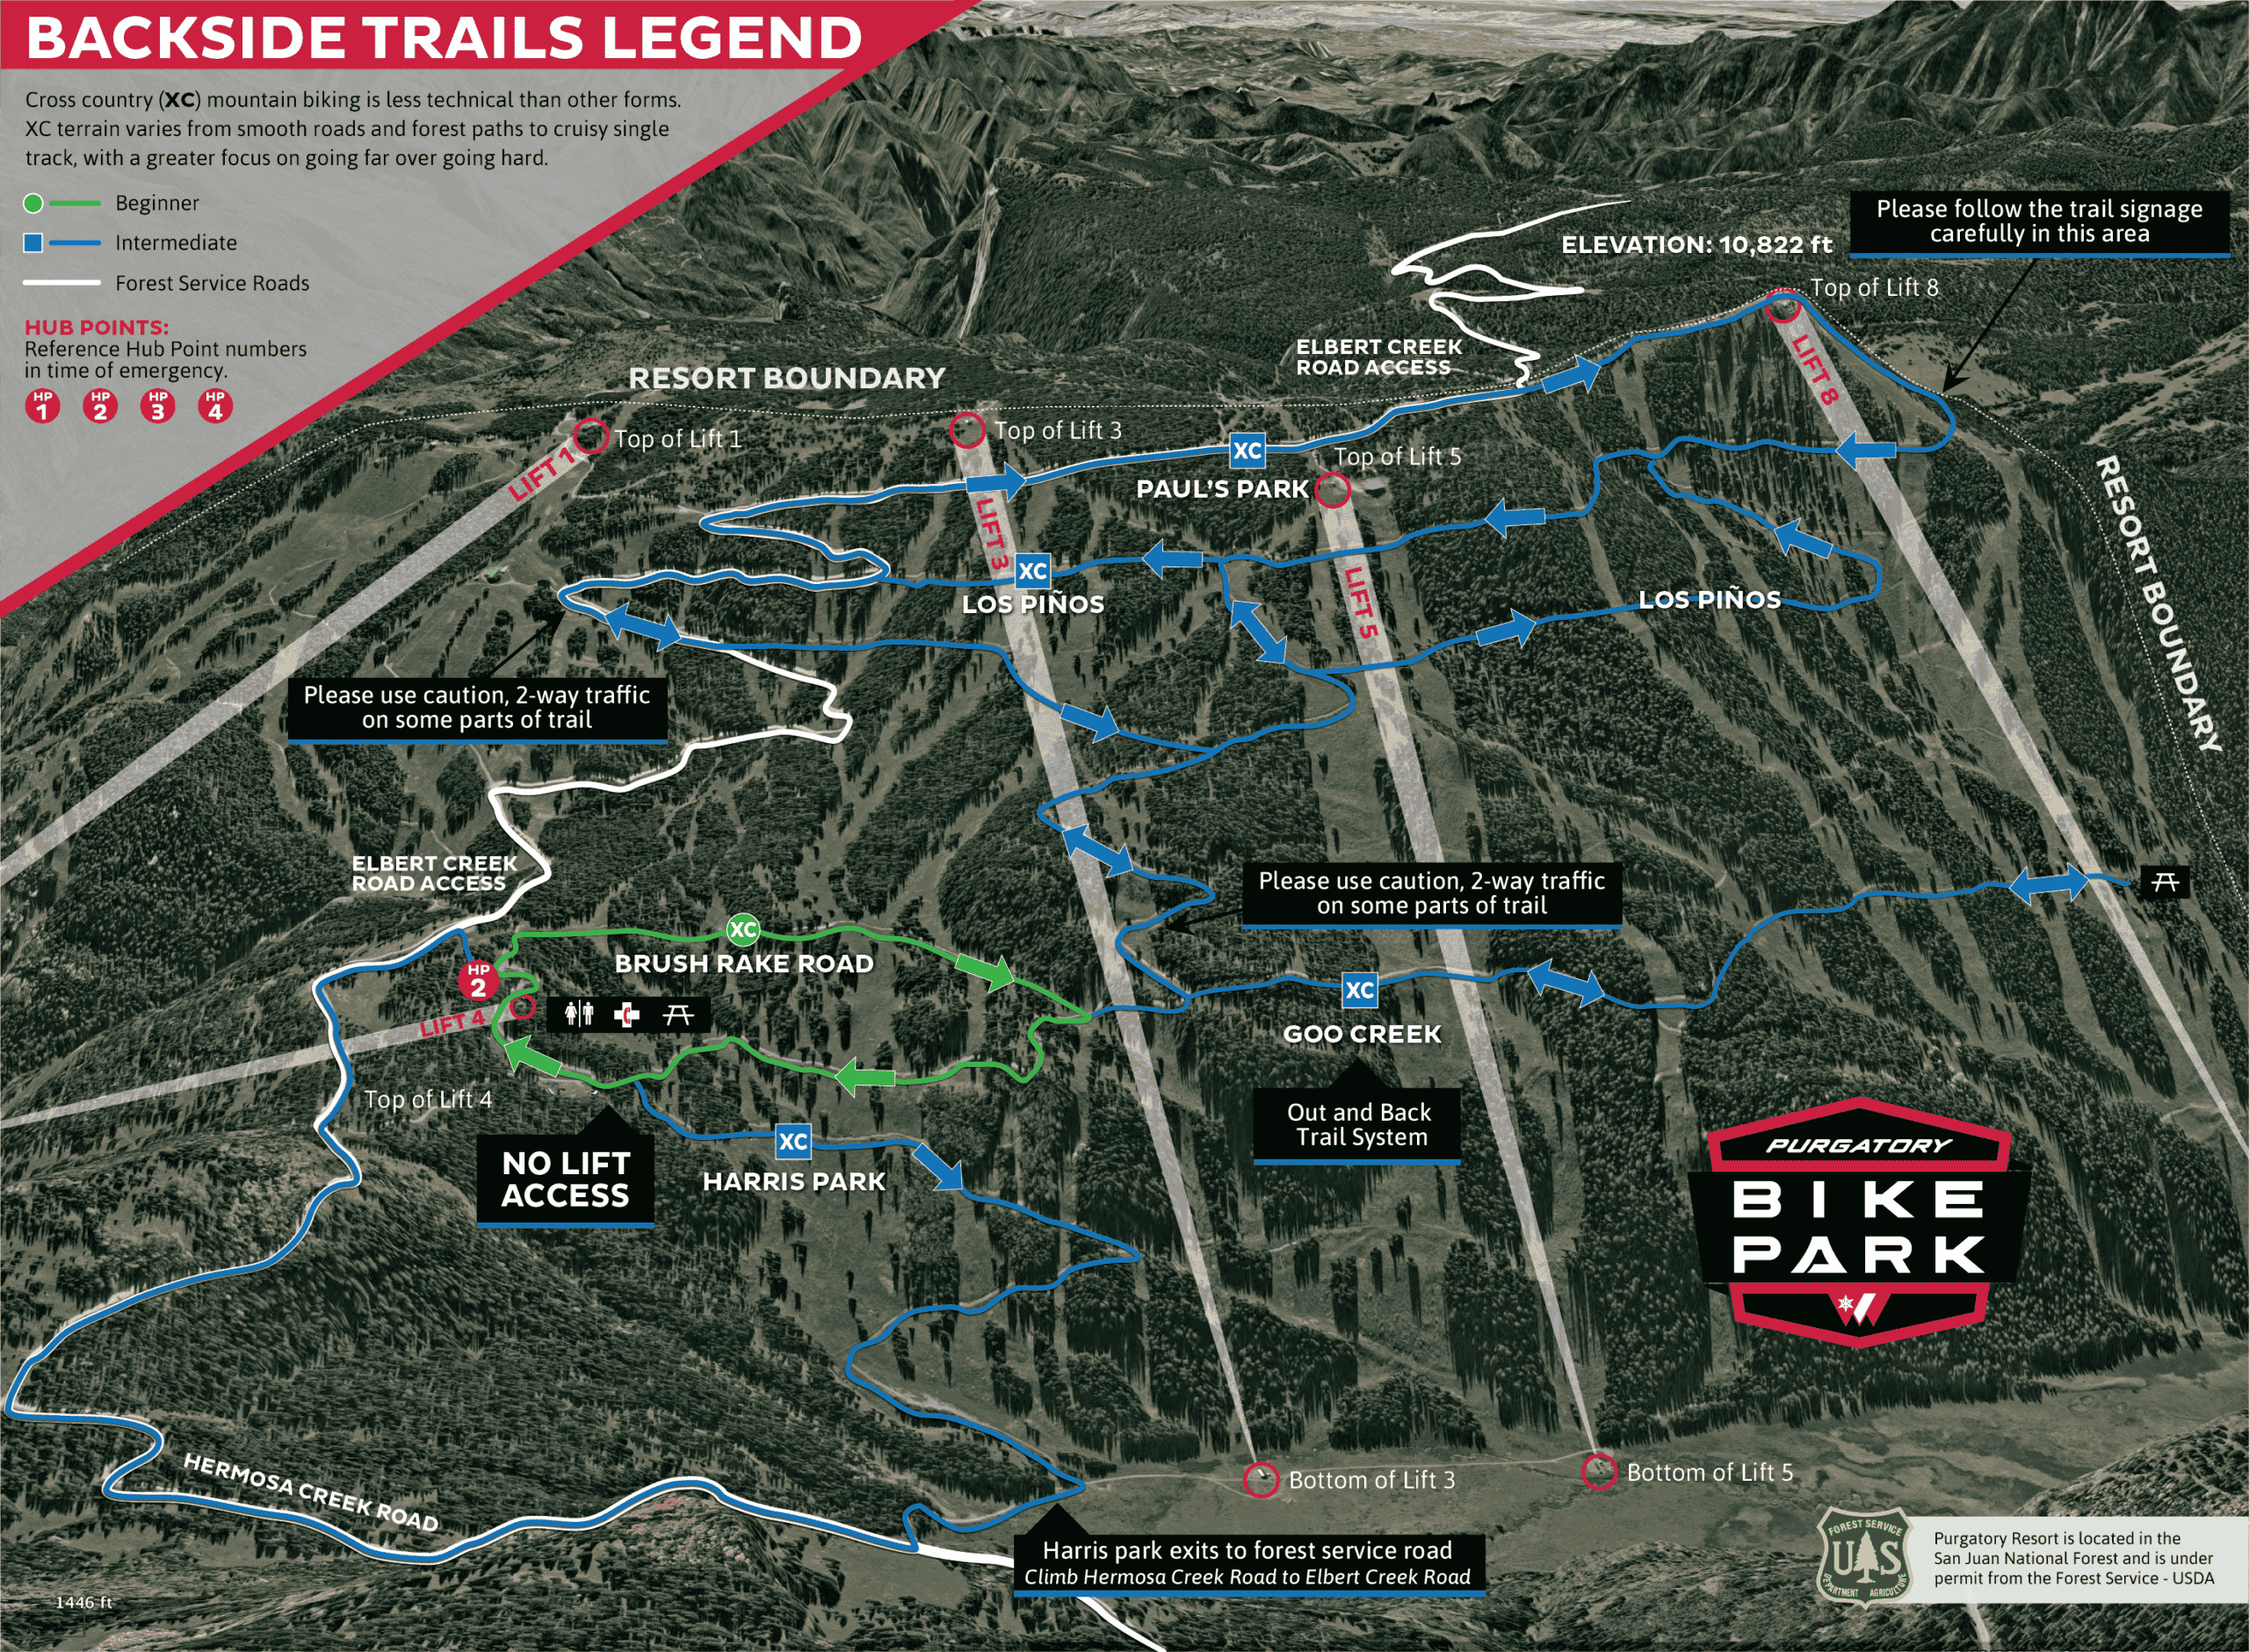 Backside summer Purgatorybike park trail map